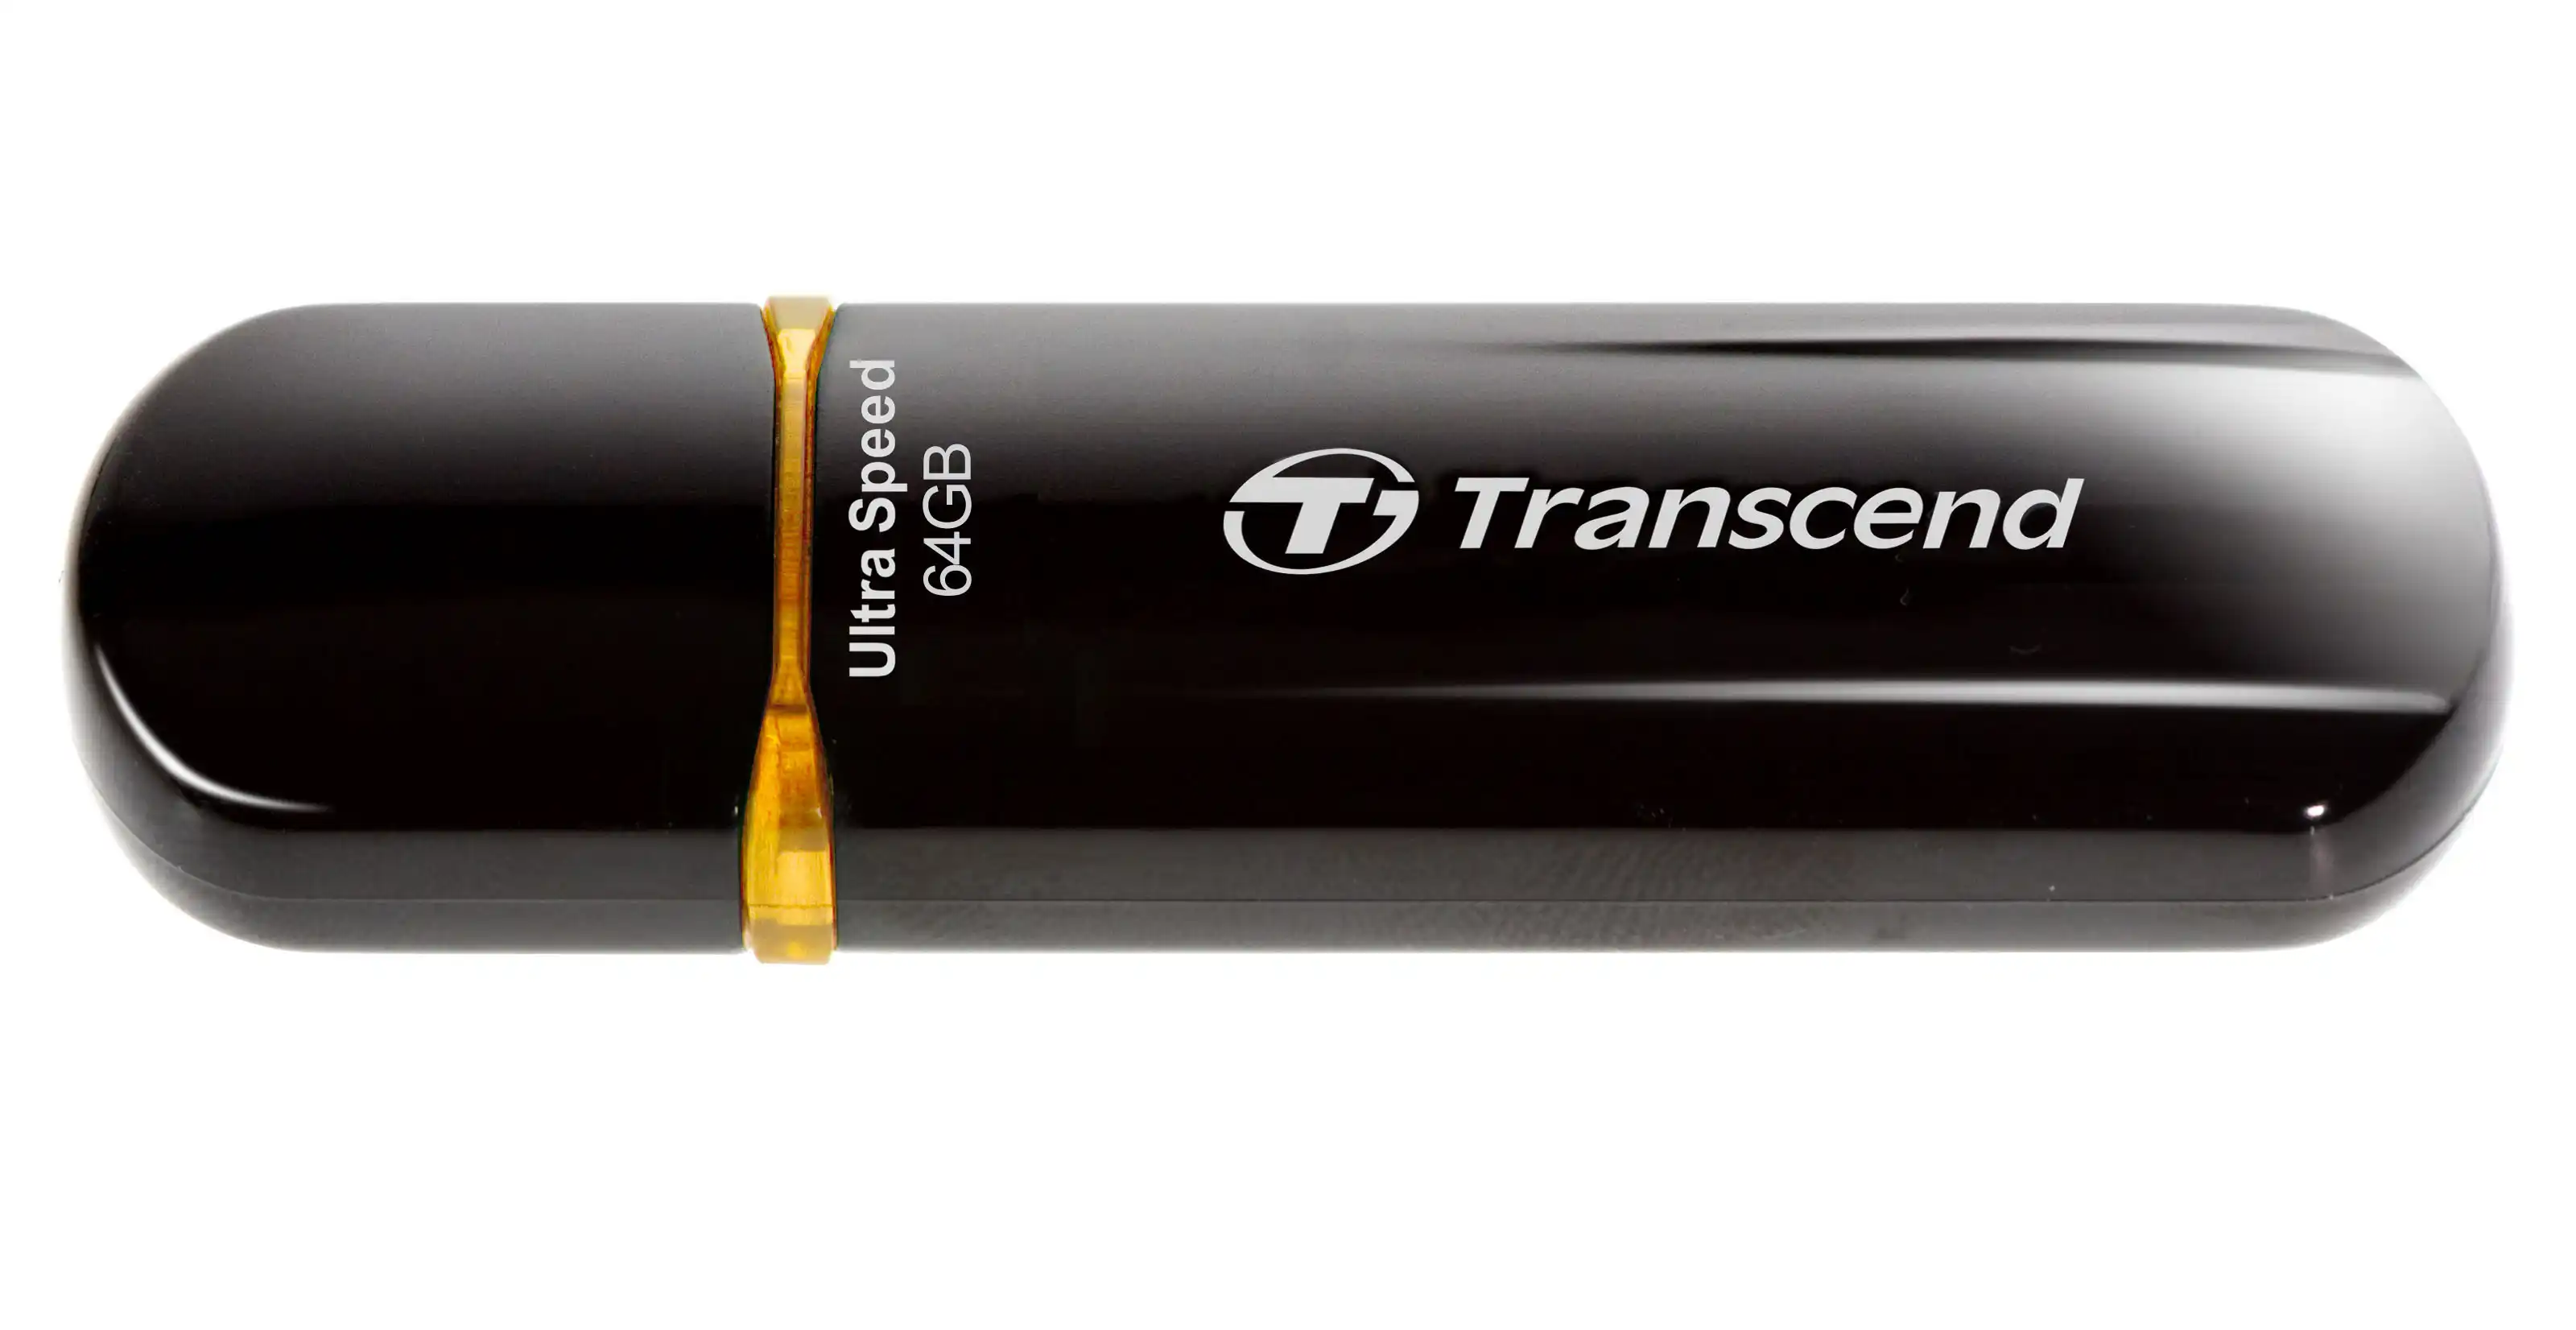 Флеш-накопитель TRANSCEND JetFlash 600 64GB (TS64GJF600)